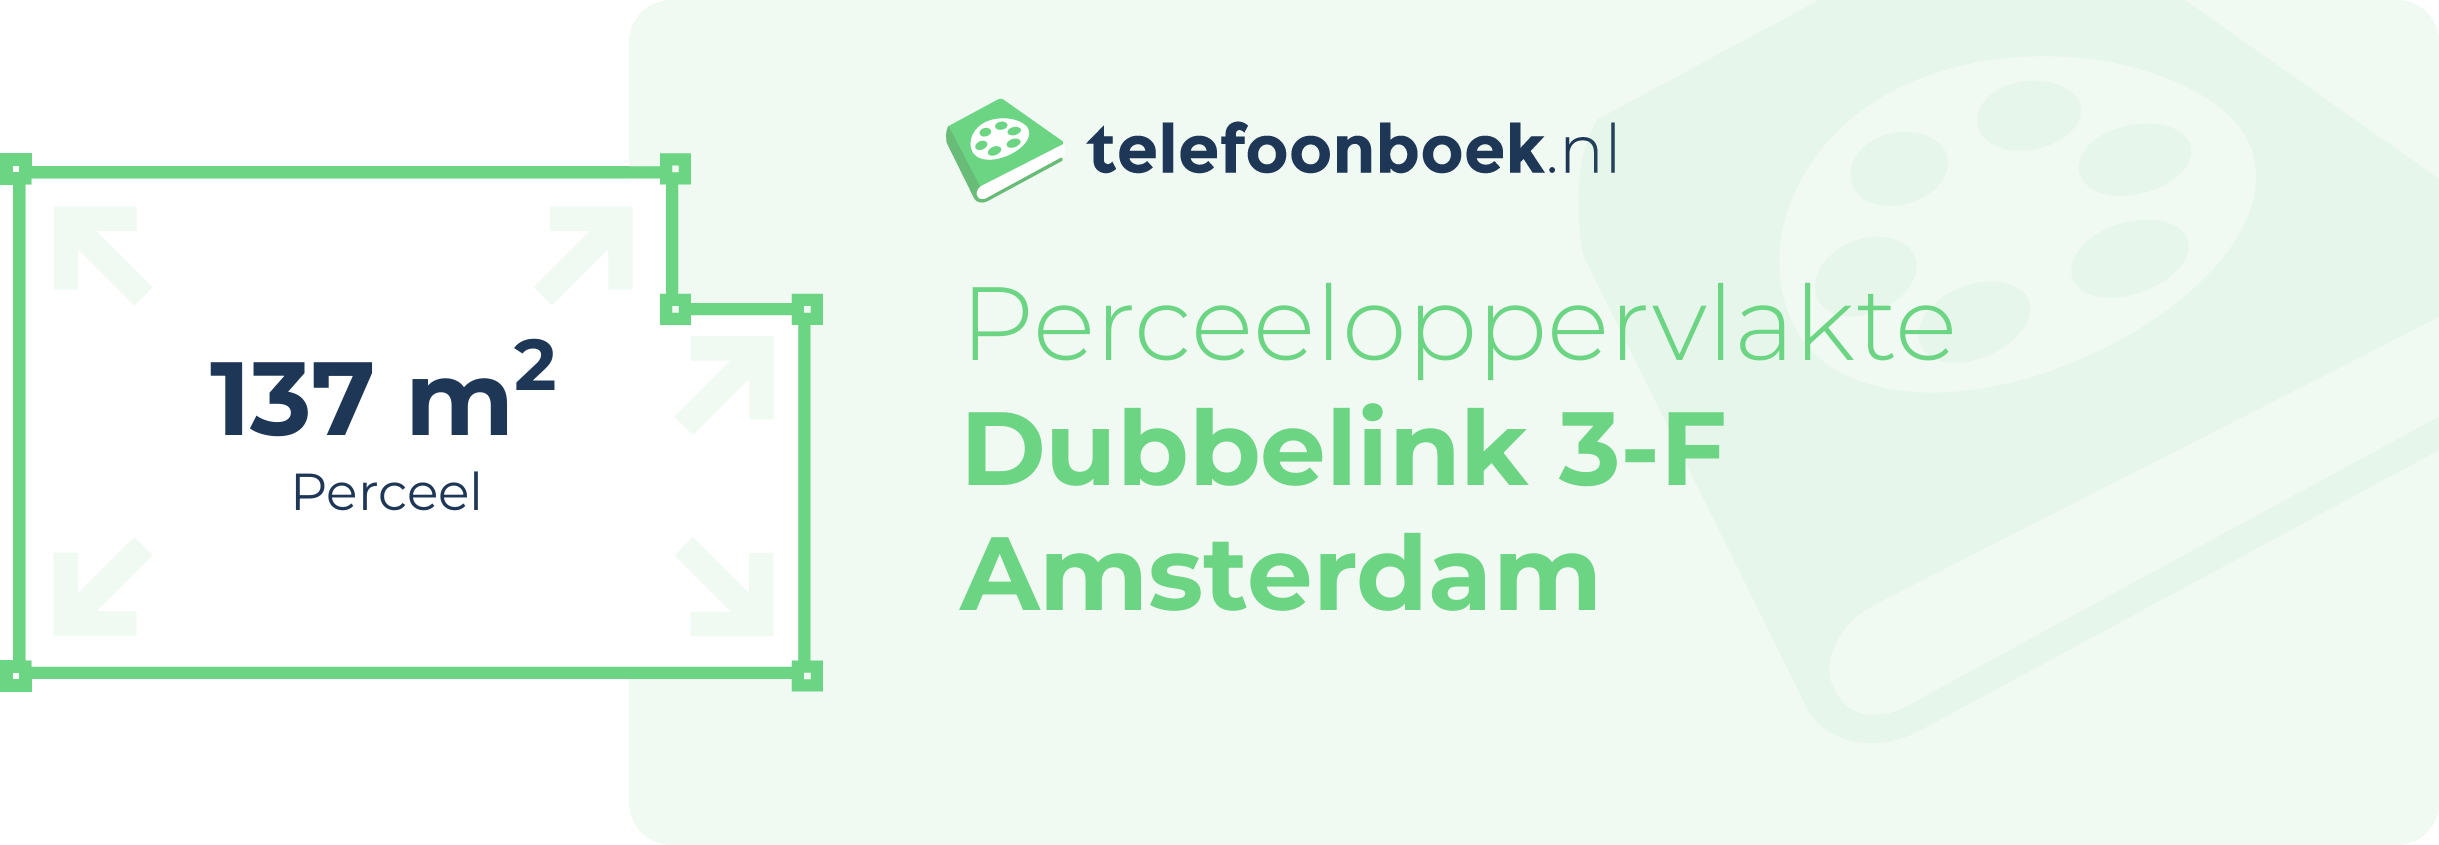 Perceeloppervlakte Dubbelink 3-F Amsterdam